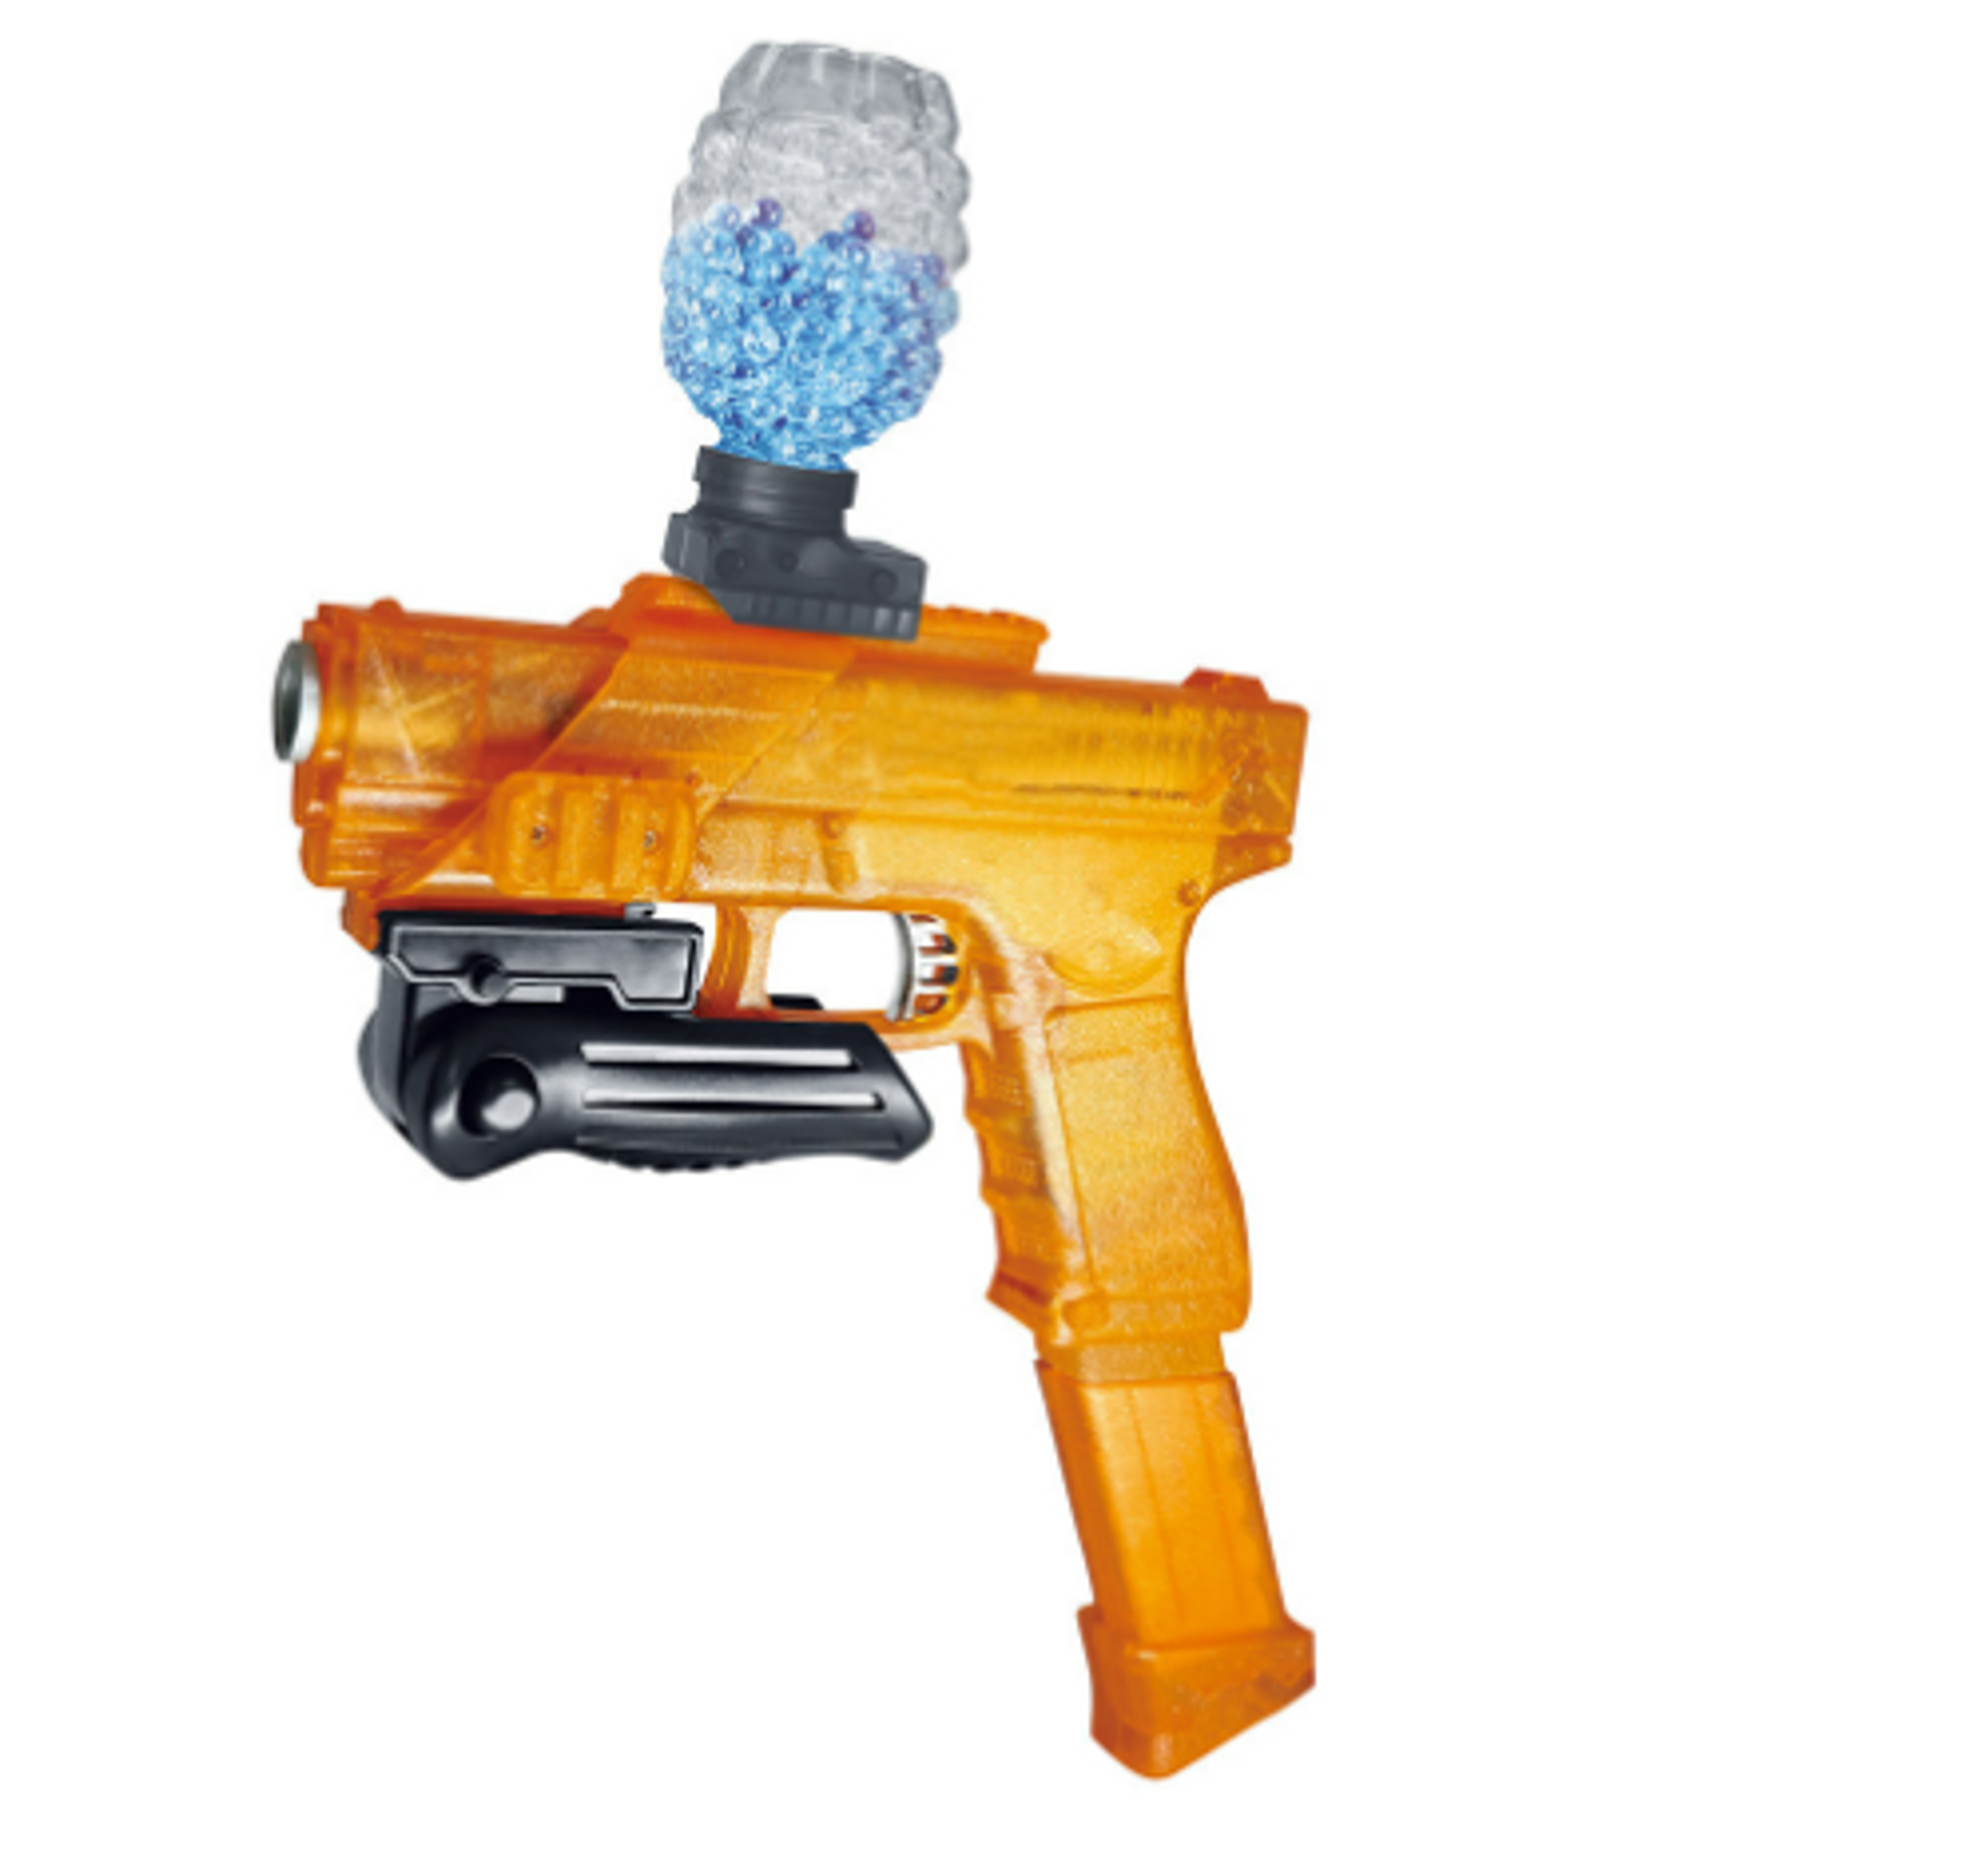 Airsoft Splatter Blaster Gun, Outdoor Indoor Best Gift for Holidays Christmas Birthday, Gel Ball Blaster Splatter Toy, Water Gun Electric Automatic Outdoor Activity